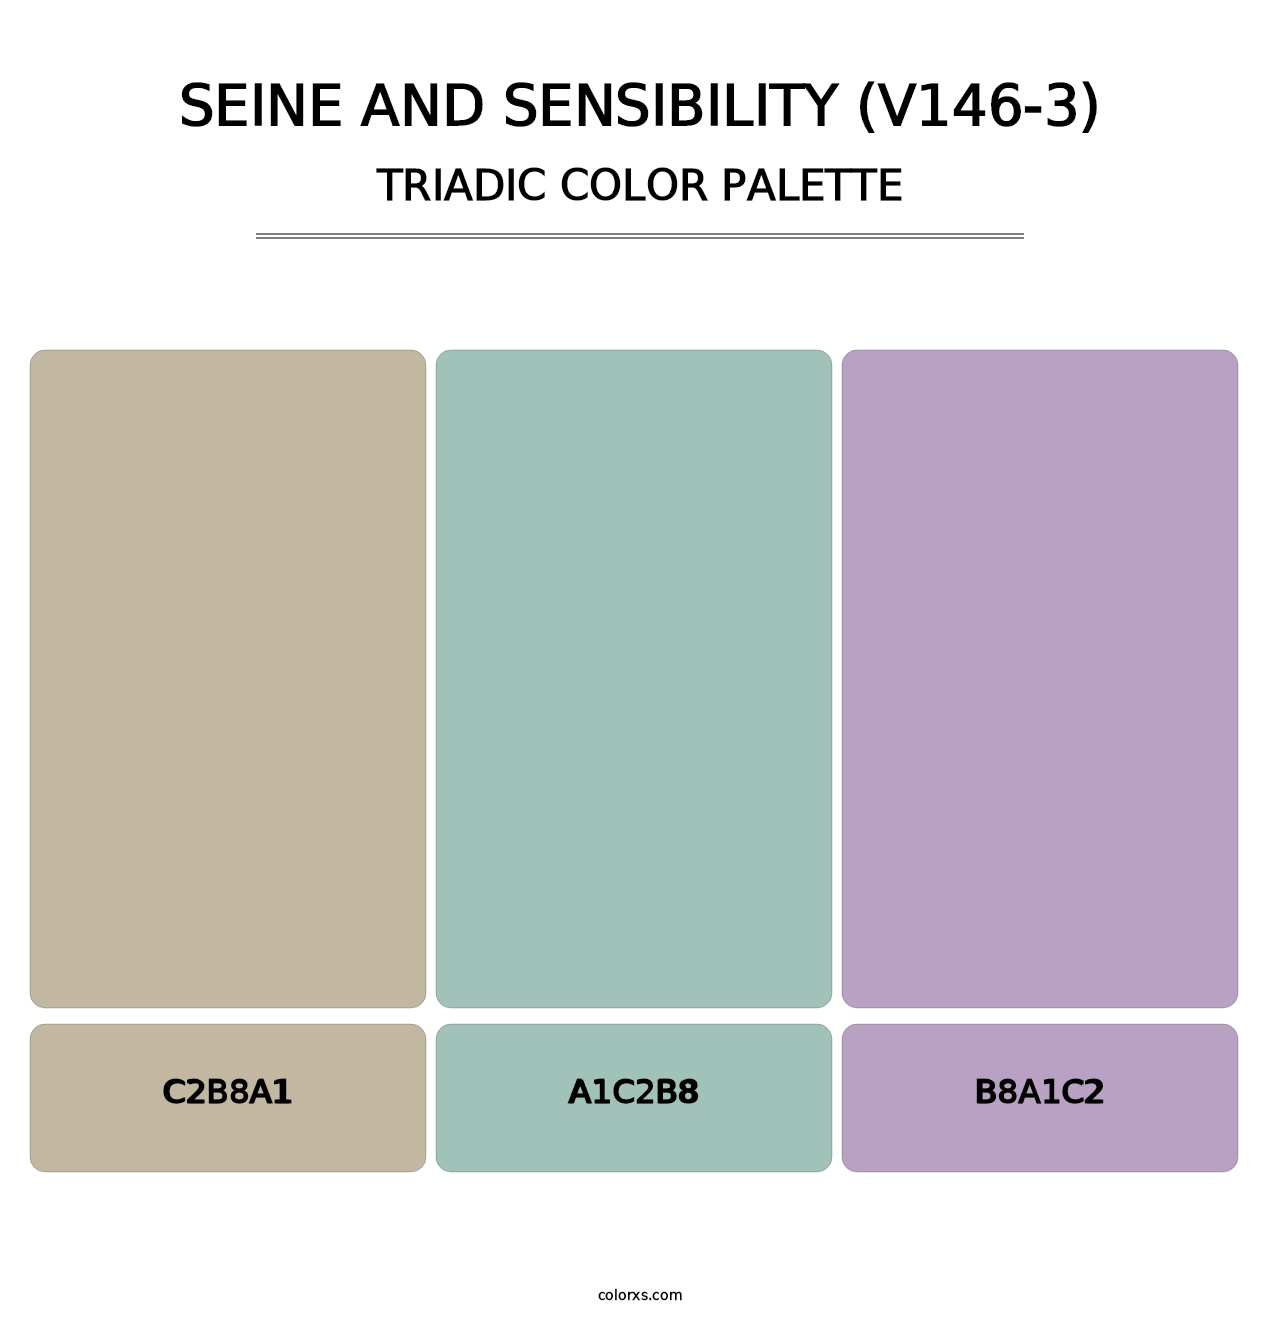 Seine and Sensibility (V146-3) - Triadic Color Palette